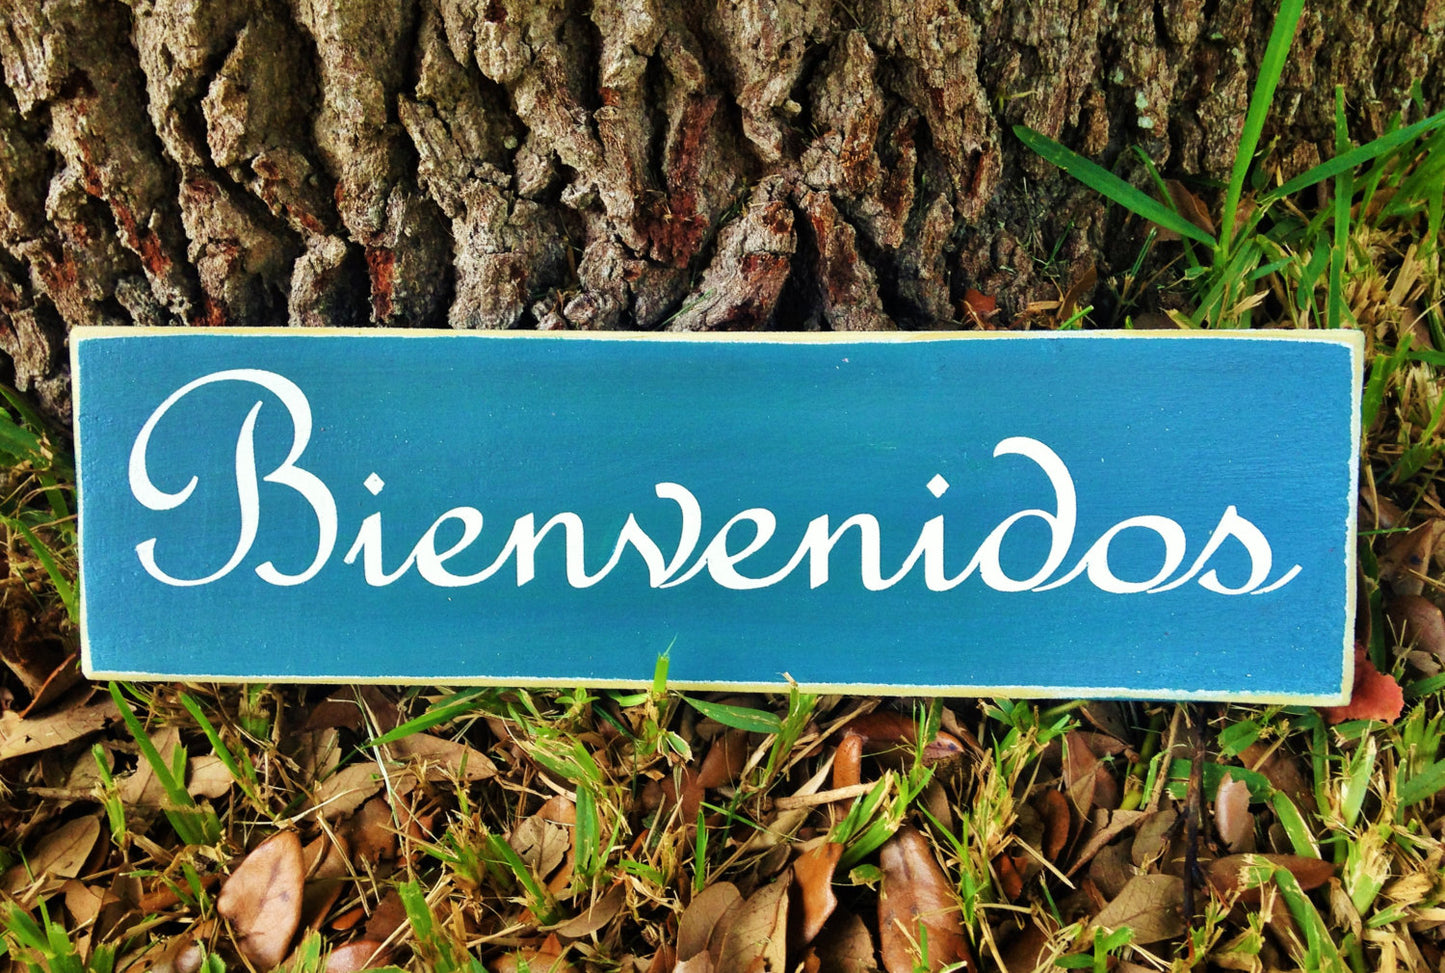 14x6 Bienvenidos Wood Spanish Welcome Sign